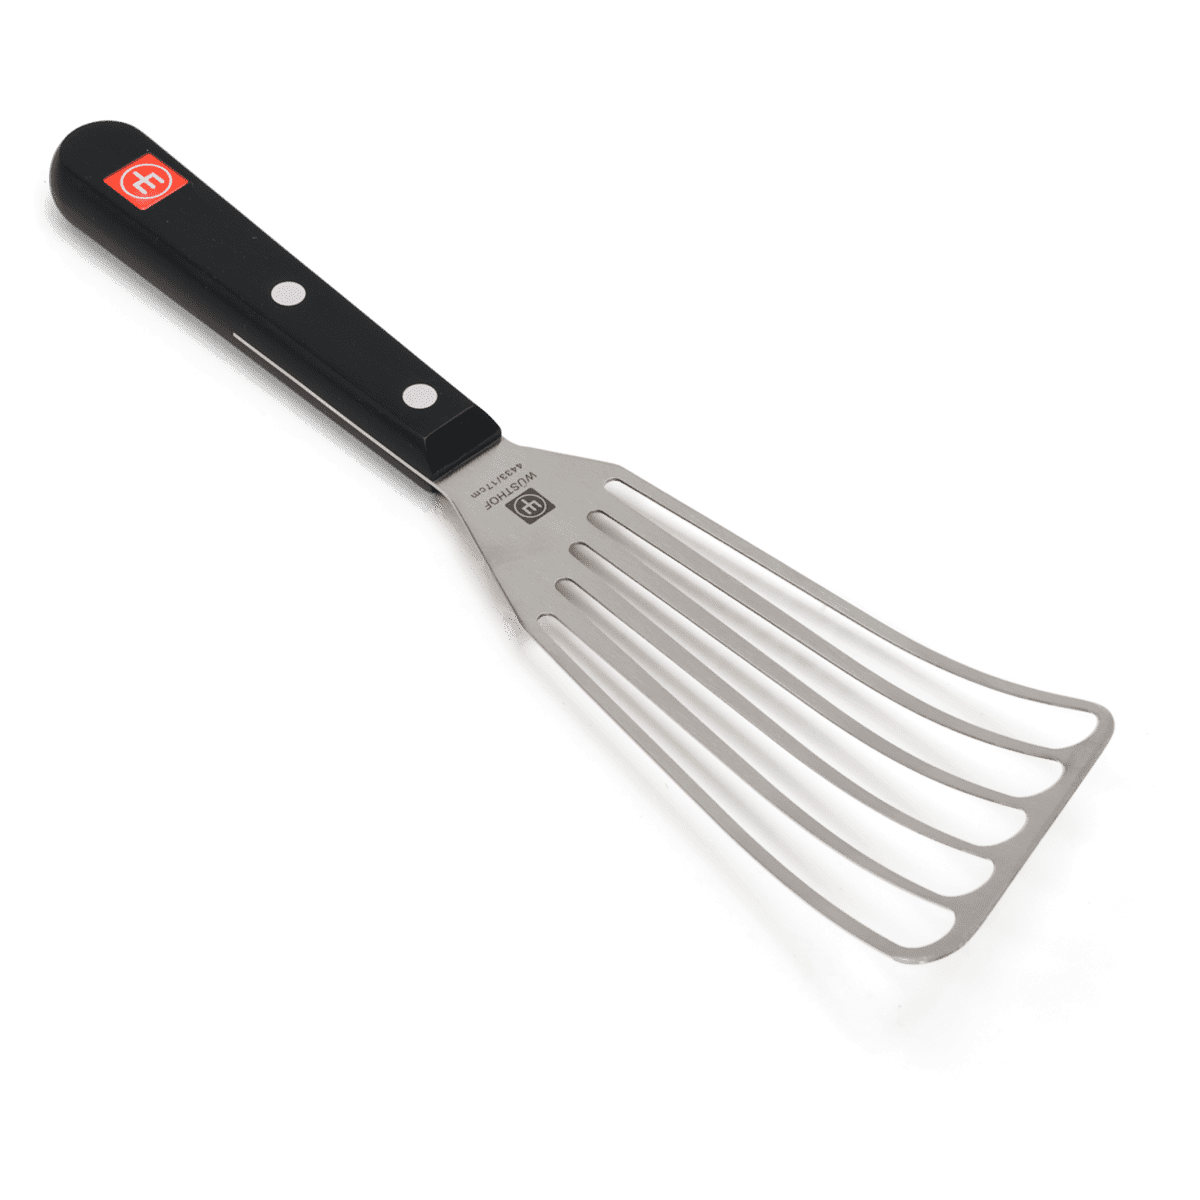 long metal spatula